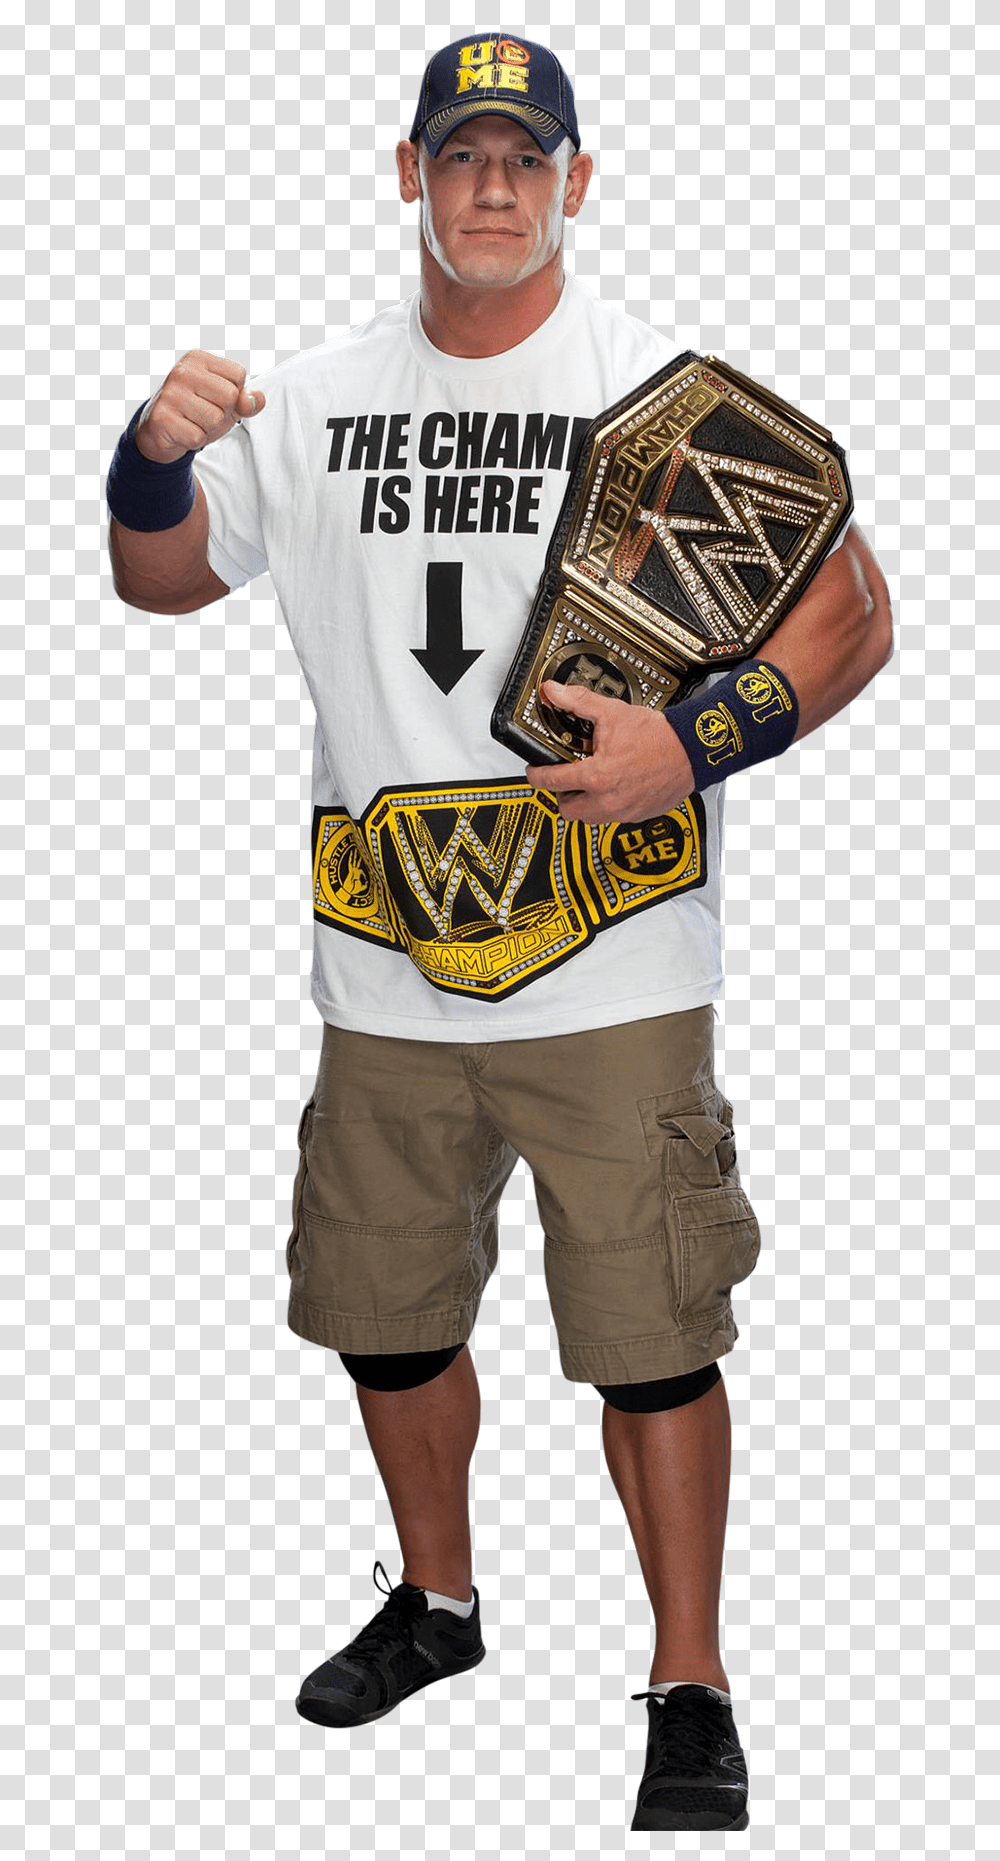 John Cena Google Search John Cena Wwe Champion Wwe John Cena Wwe Champion, Clothing, Person, Shirt, Jersey Transparent Png